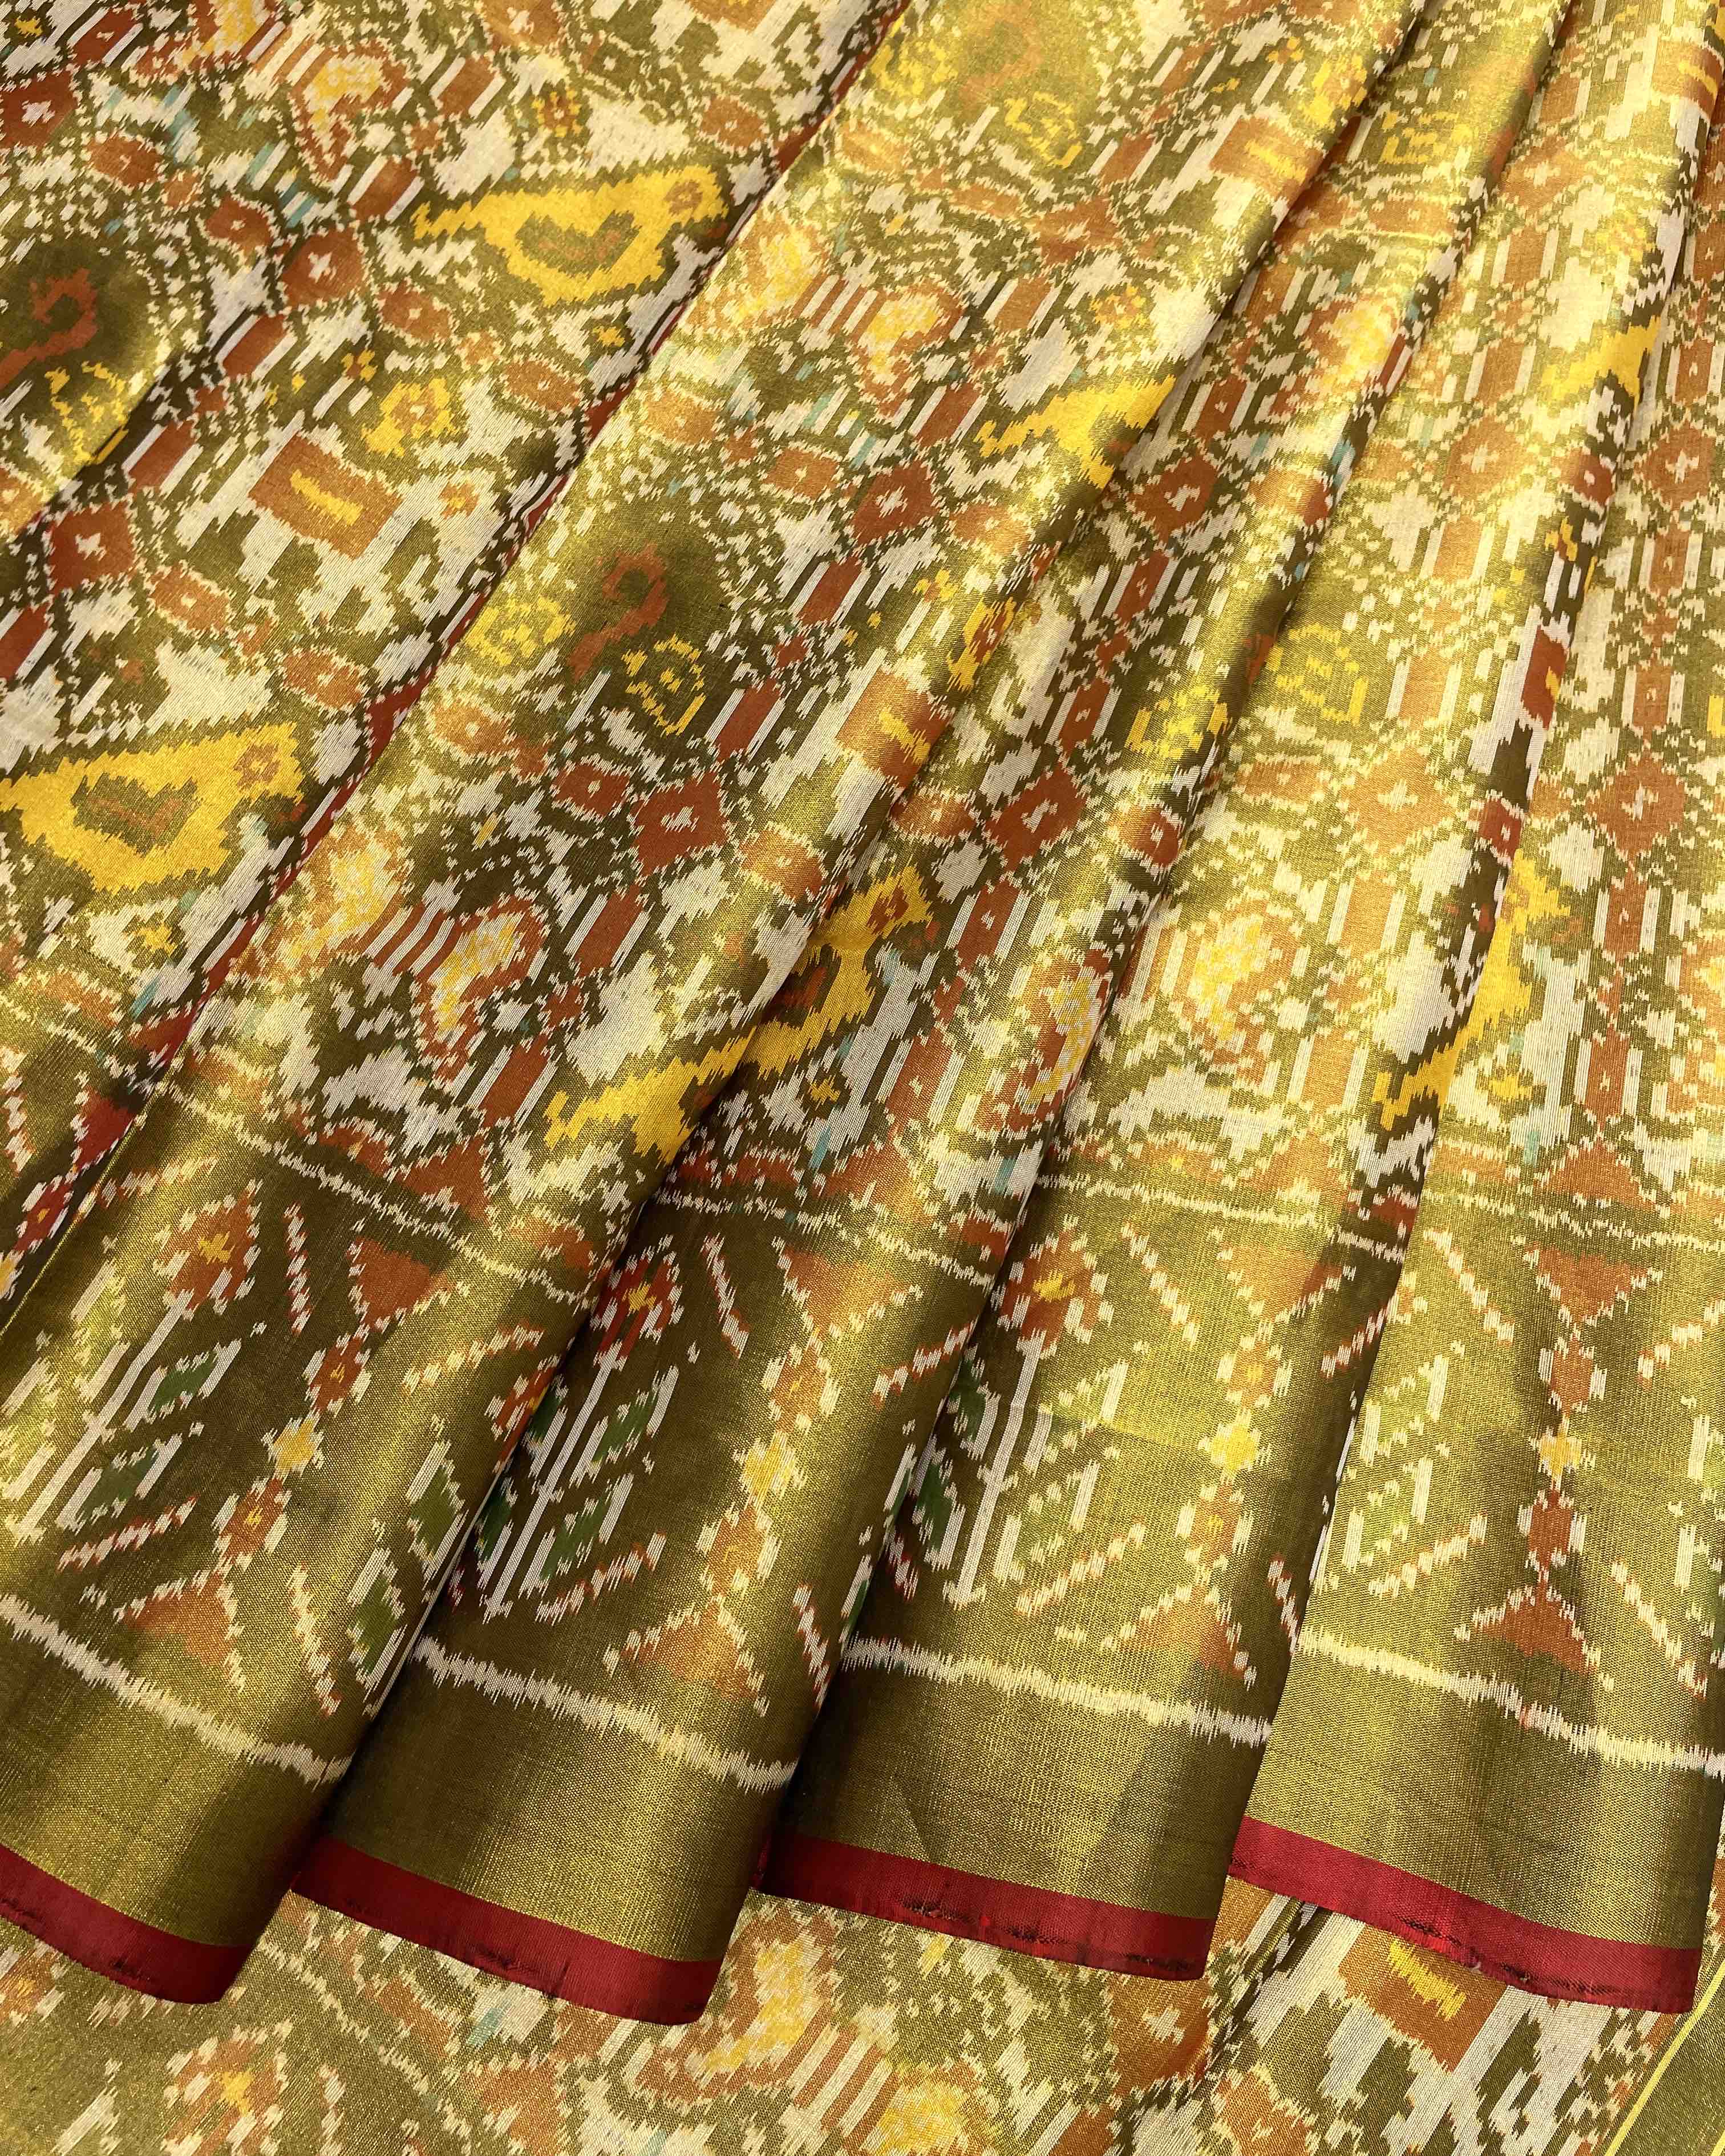 Golden & White Narikunj Tissue Designer Patola Saree